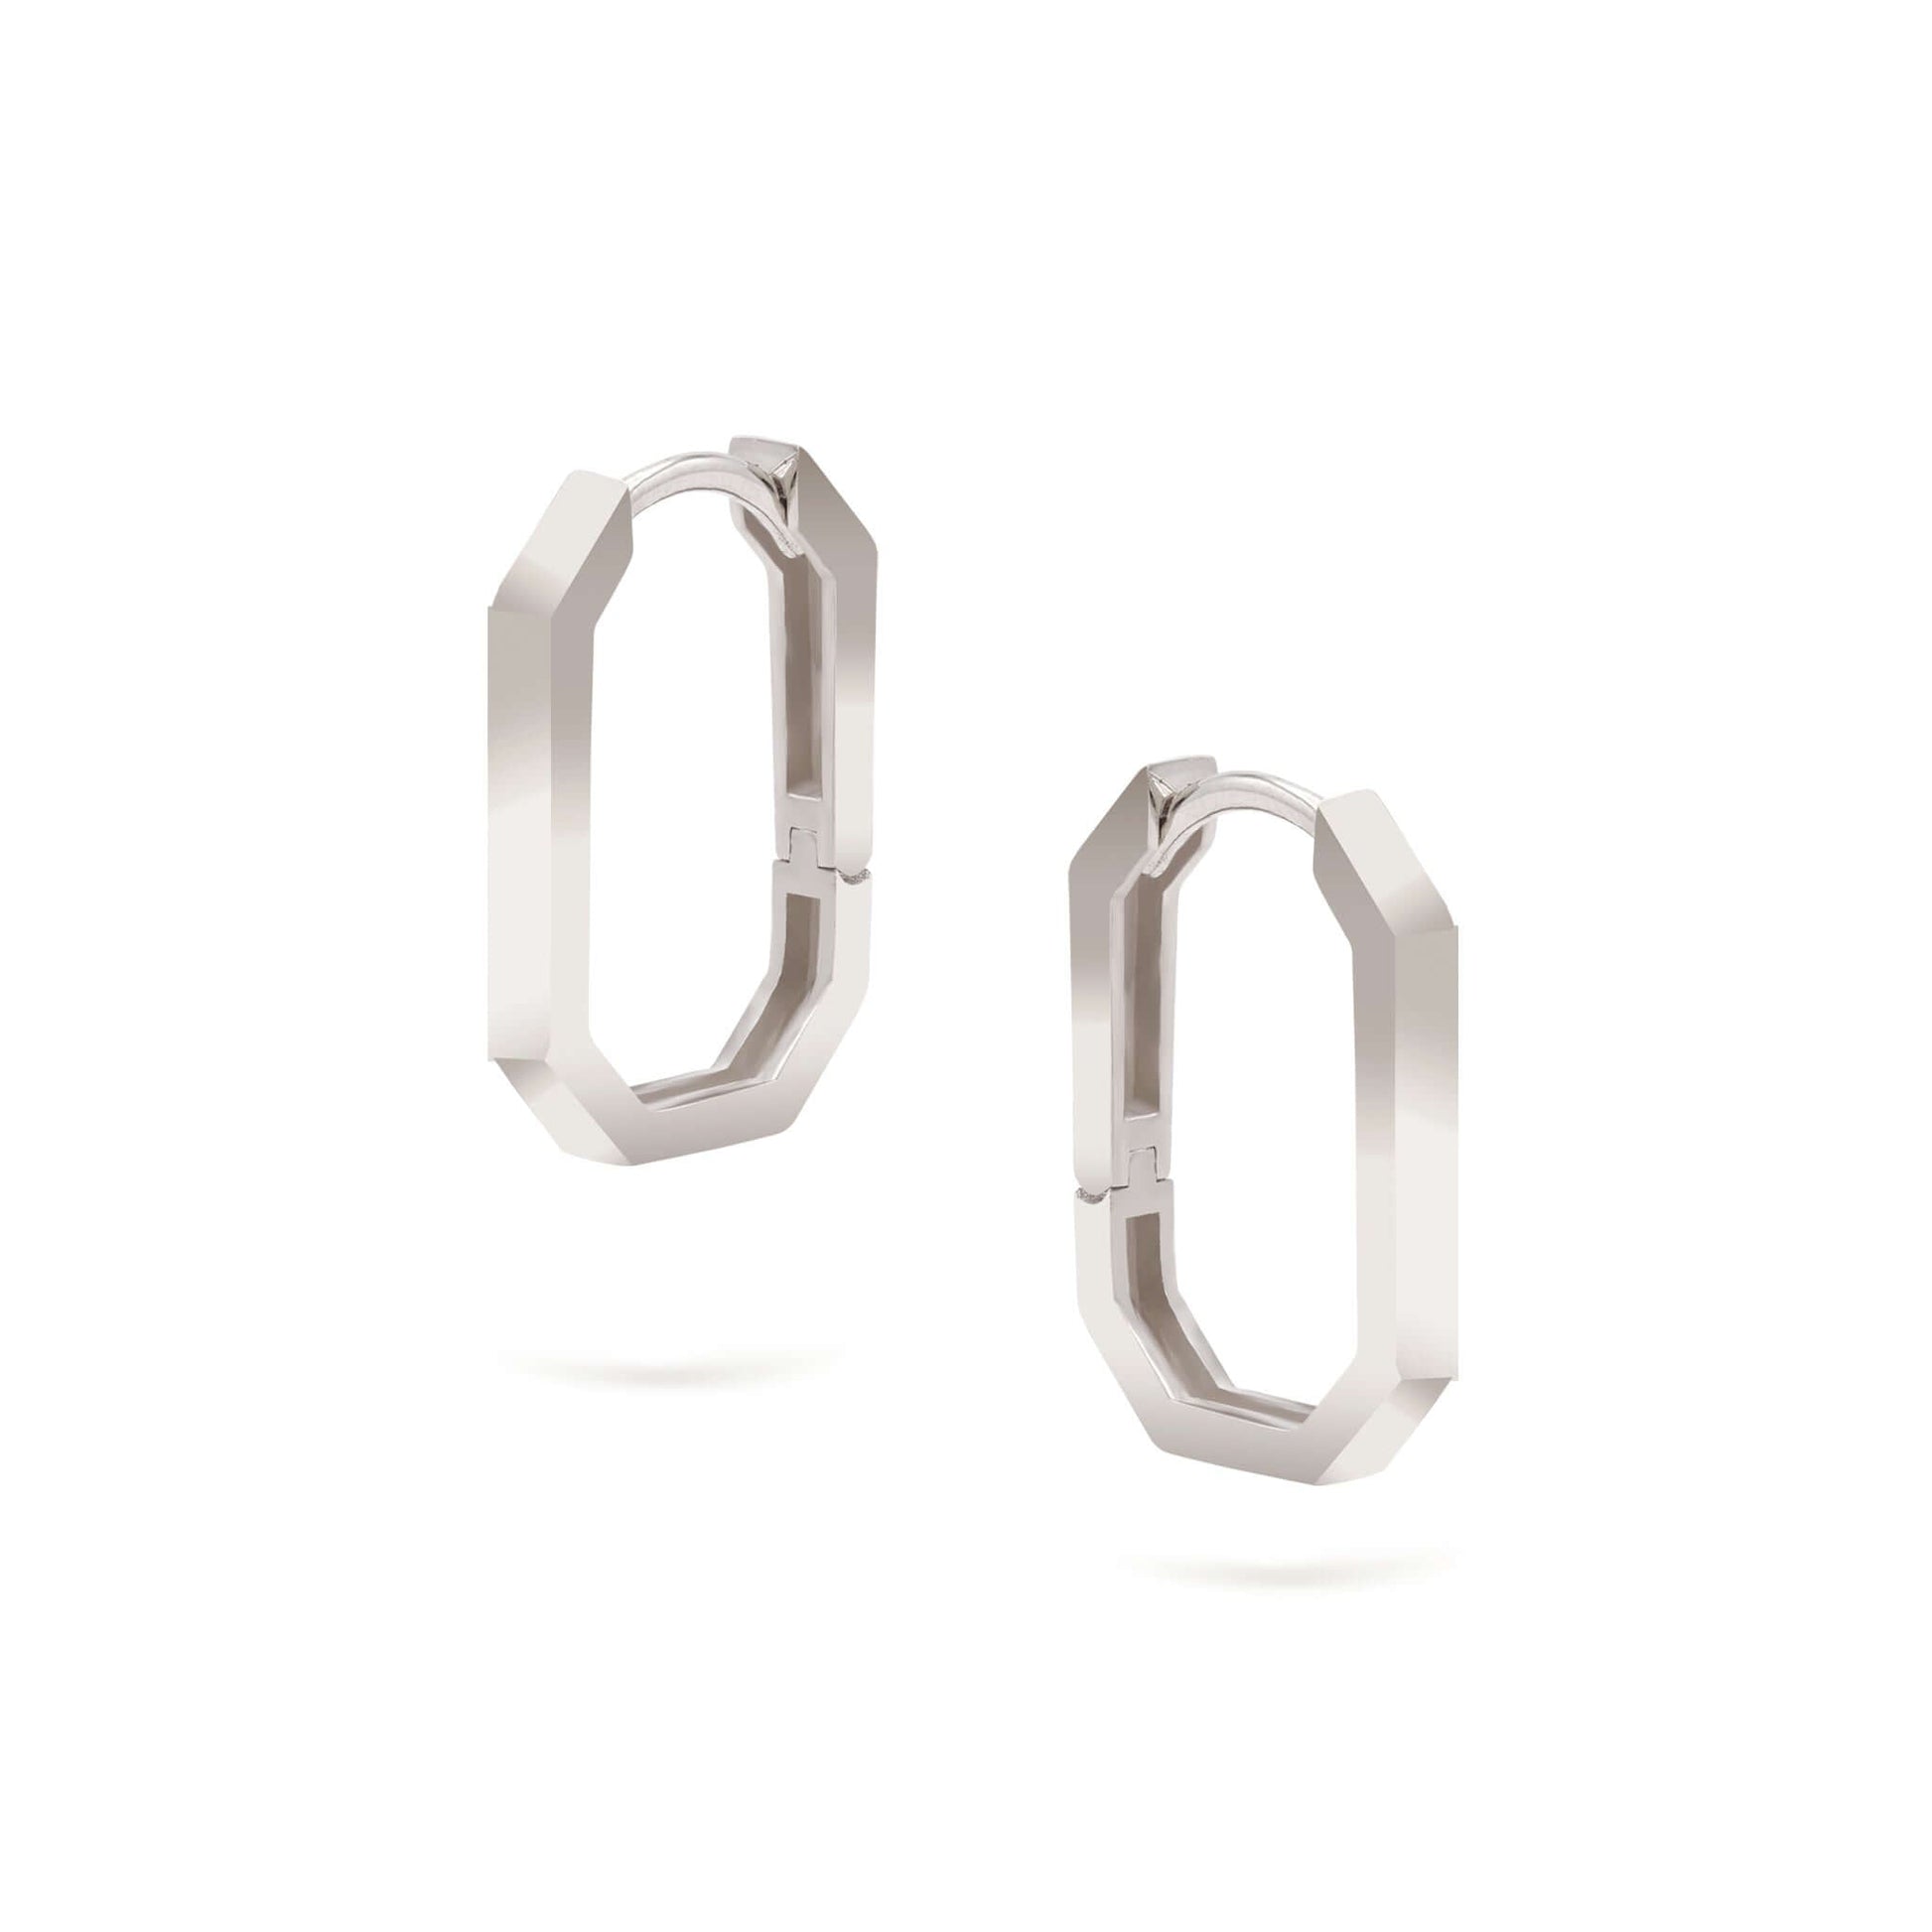 Gilda Jewelry Bold Goldens Hoops | Gold Earrings | 14K - White / Pair - earrings Zengoda Shop online from Artisan Brands